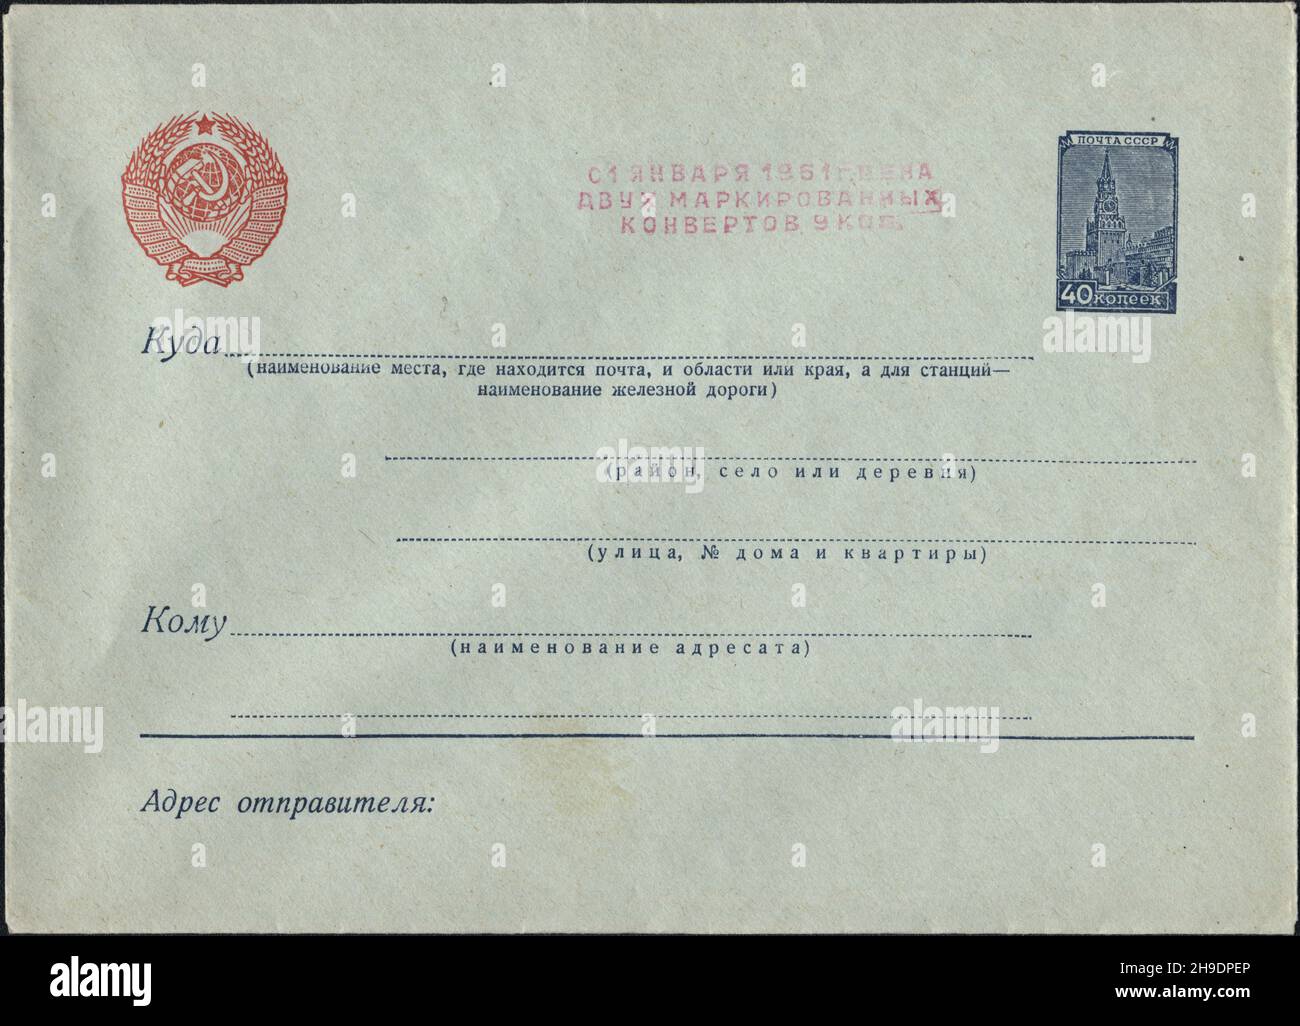 Old soviet envelope after change price, USSR 1961 Stock Photo